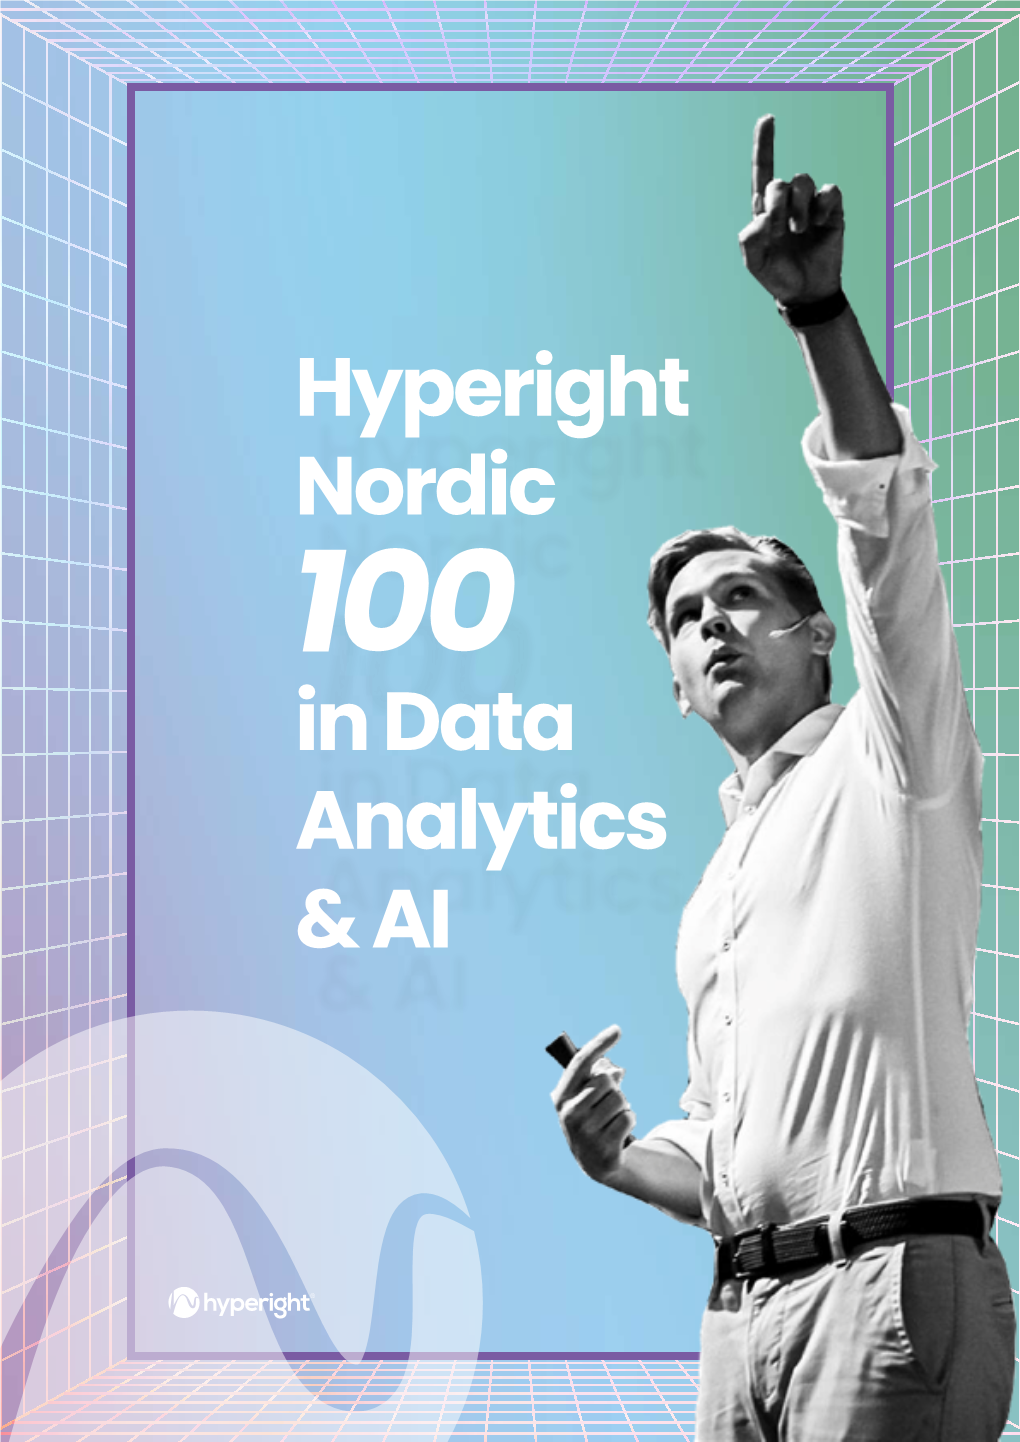 Hyperight Nordic in Data Analytics & AI